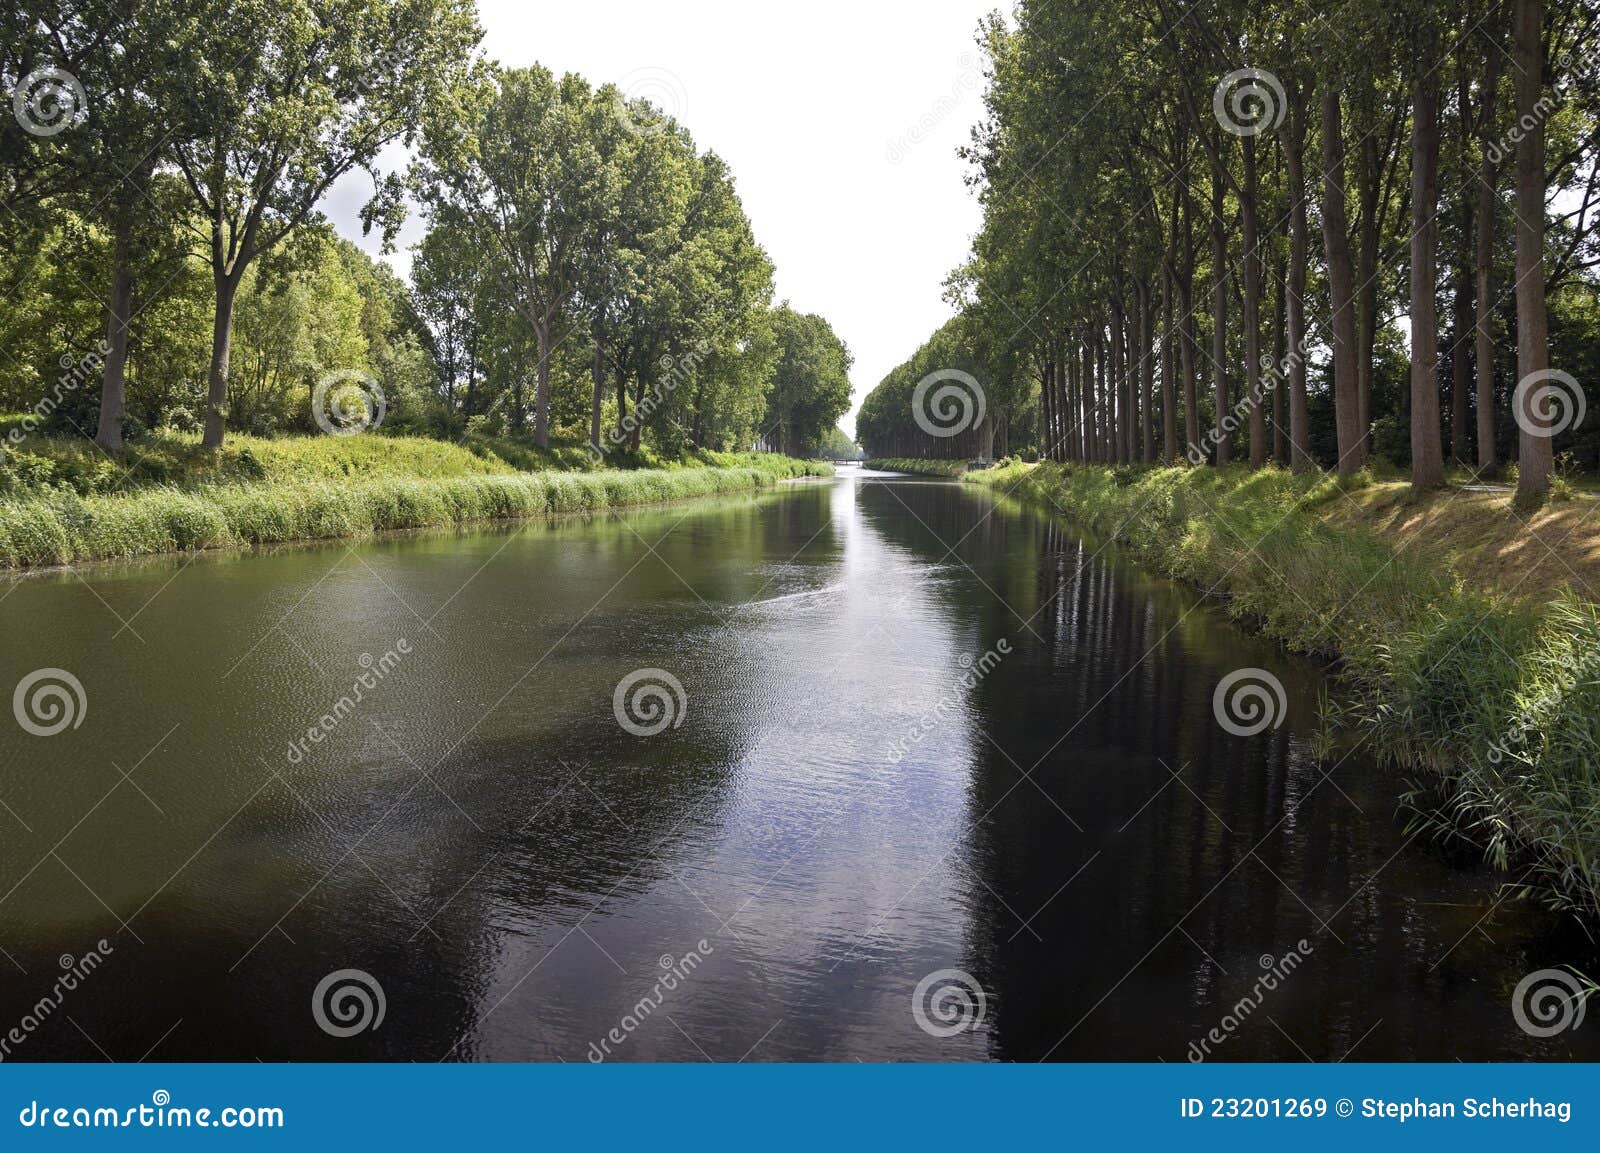 waterway, belgium